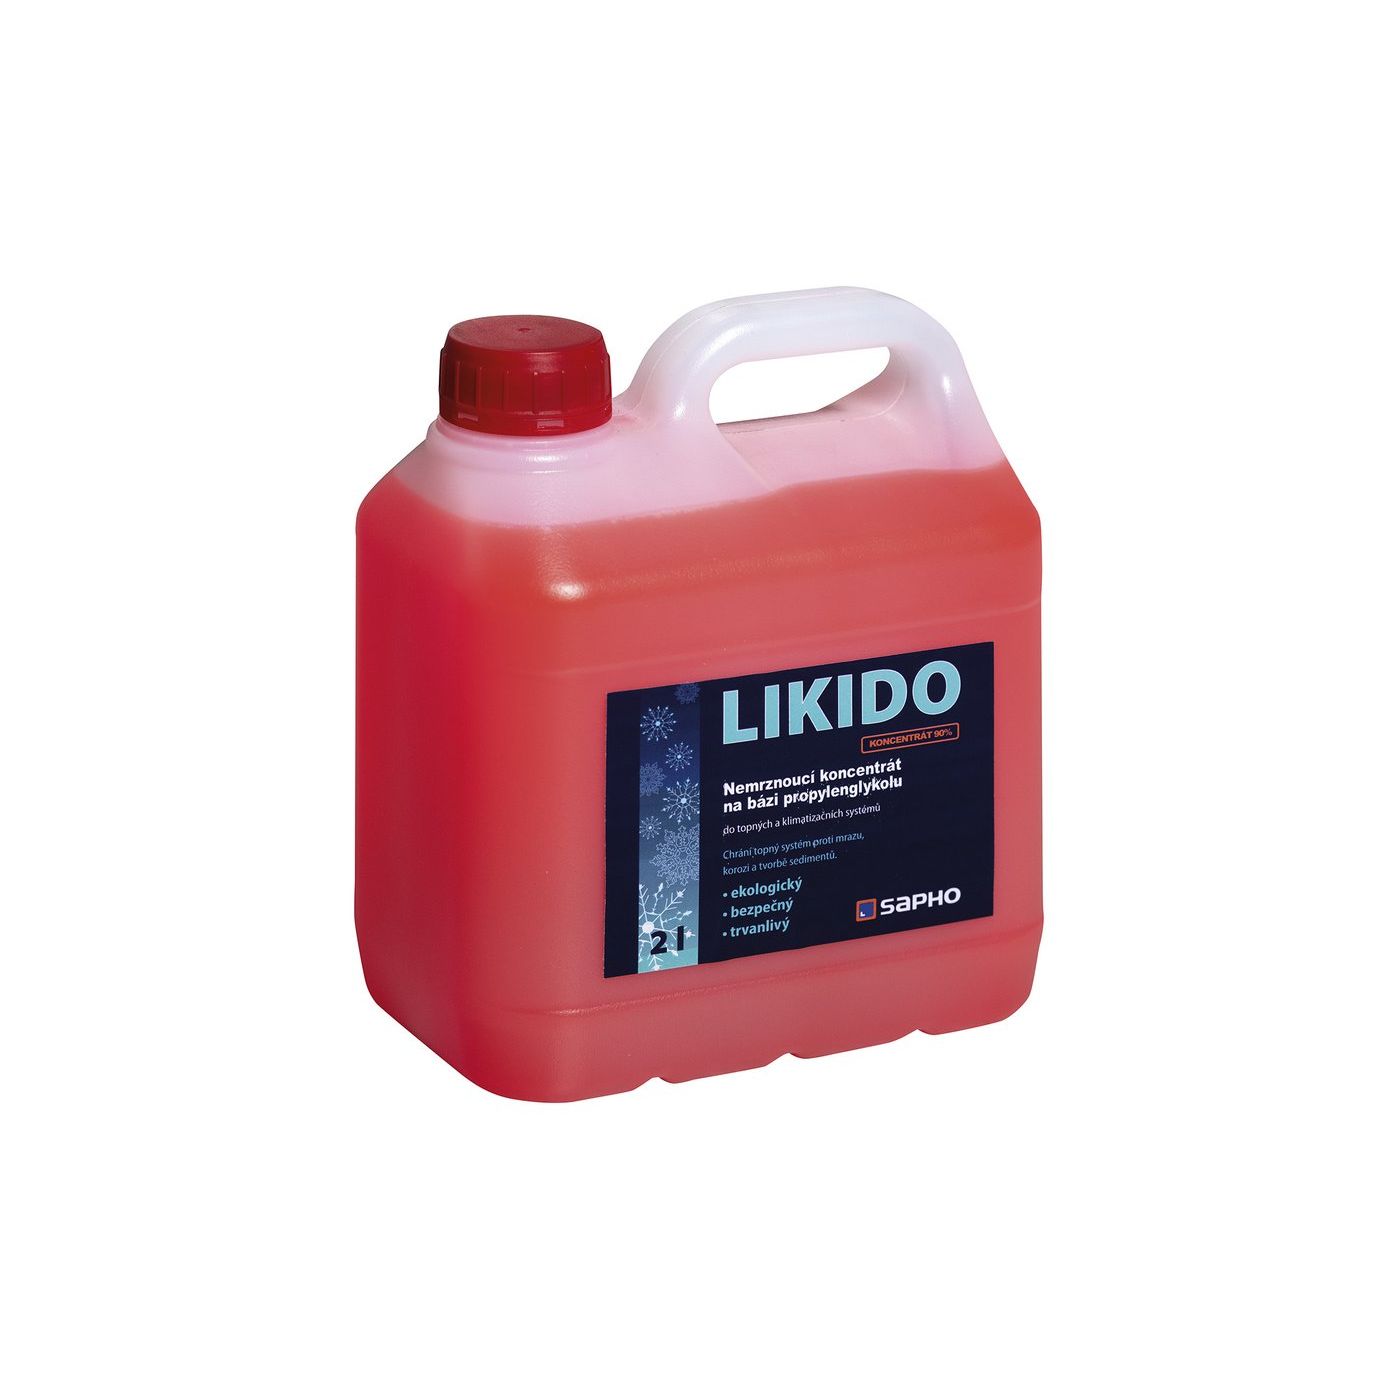 Sapho Likido warmtegeleidende vloeistof 2 liter